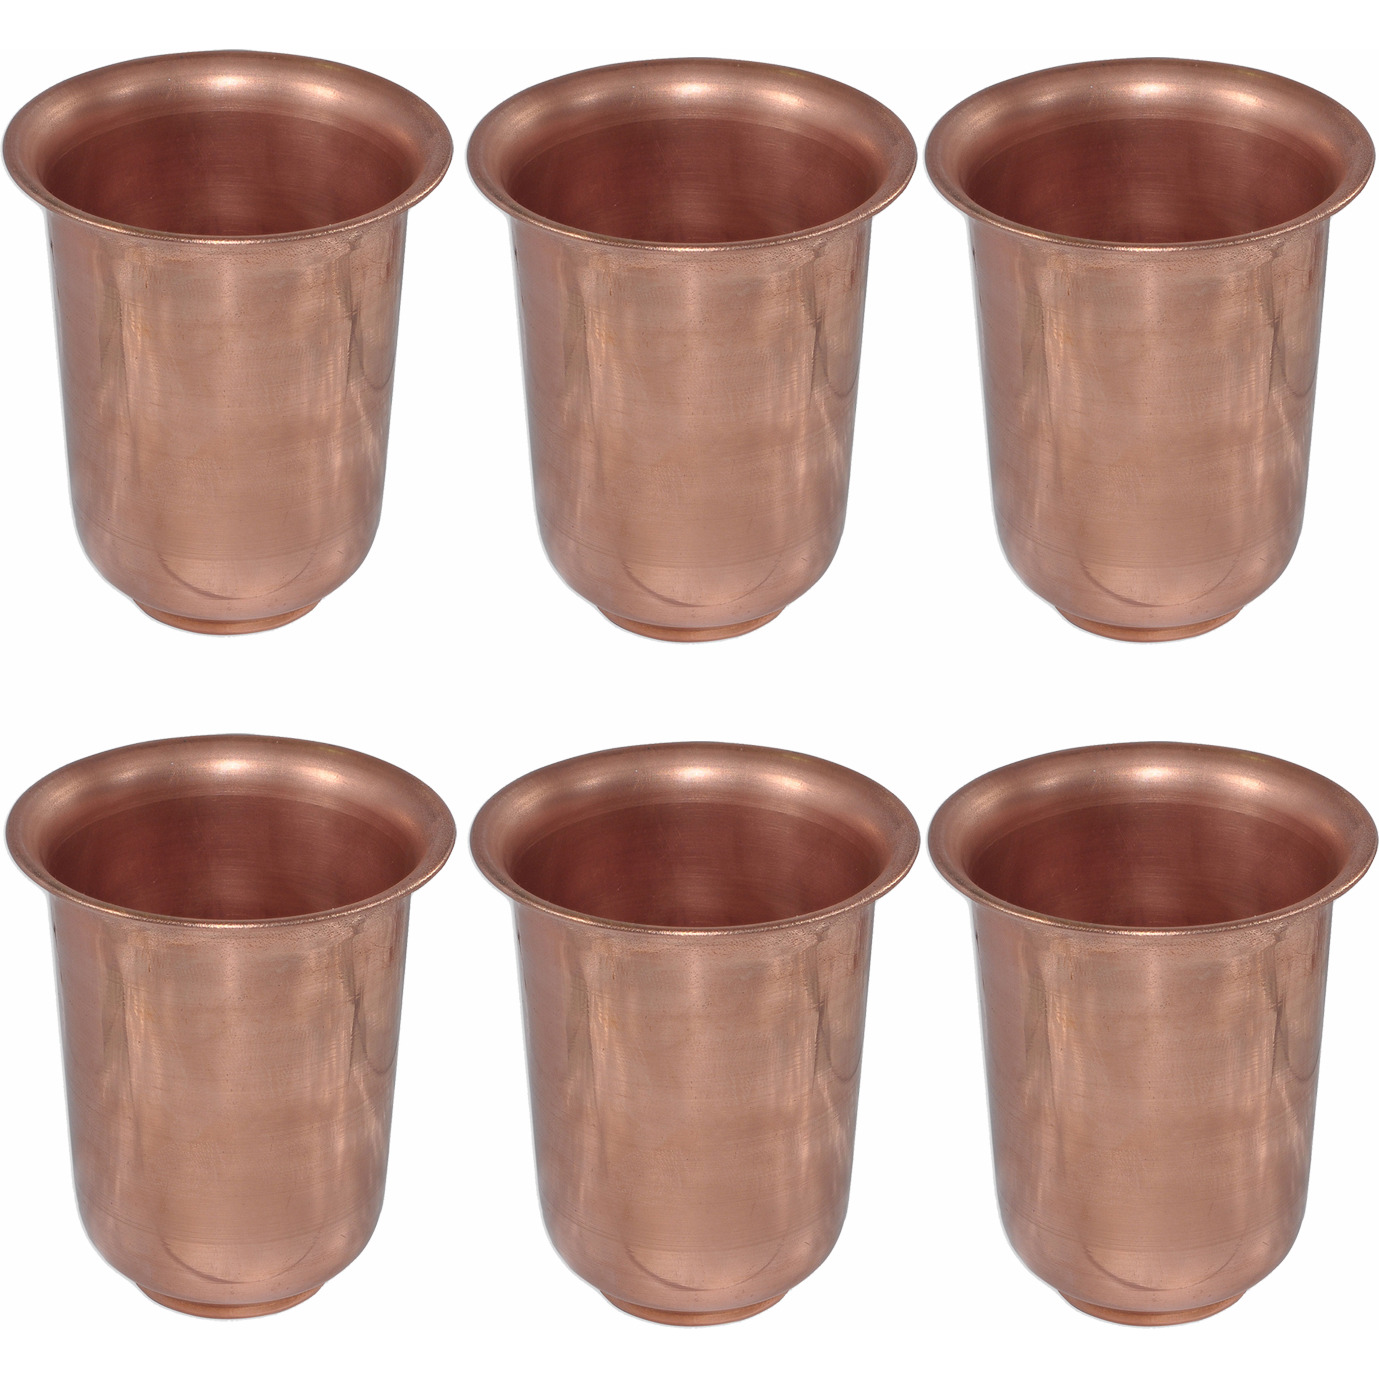 Set of 6 - Prisha India Craft B. Handmade Water Glass Copper Tumbler | Traveller's Copper Cup